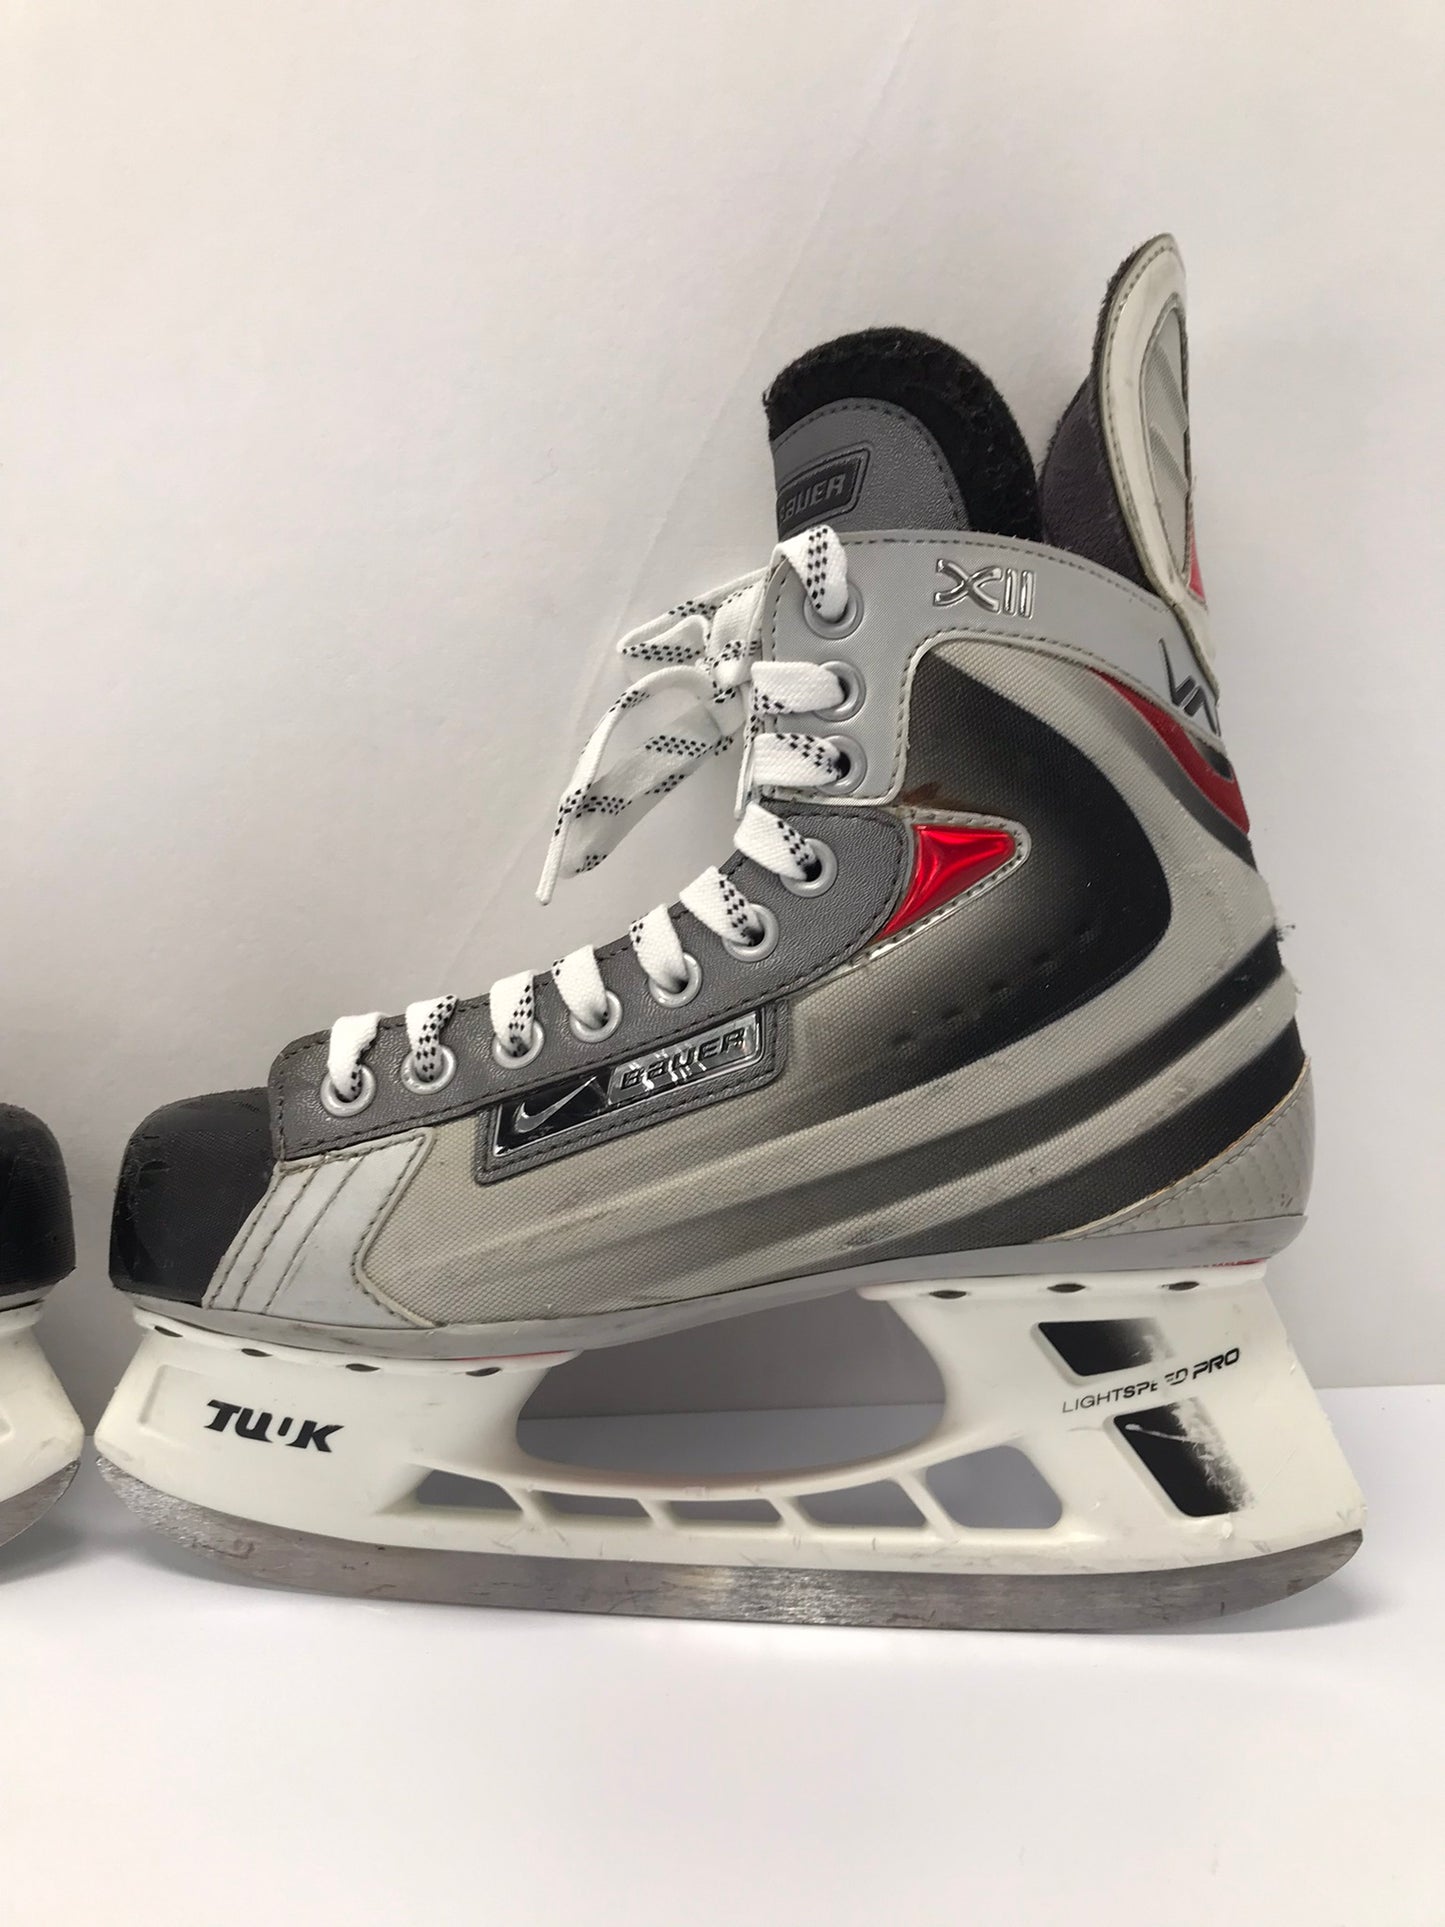 Hockey Skates Men's Size 8.5 Shoe Size Bauer Vapor